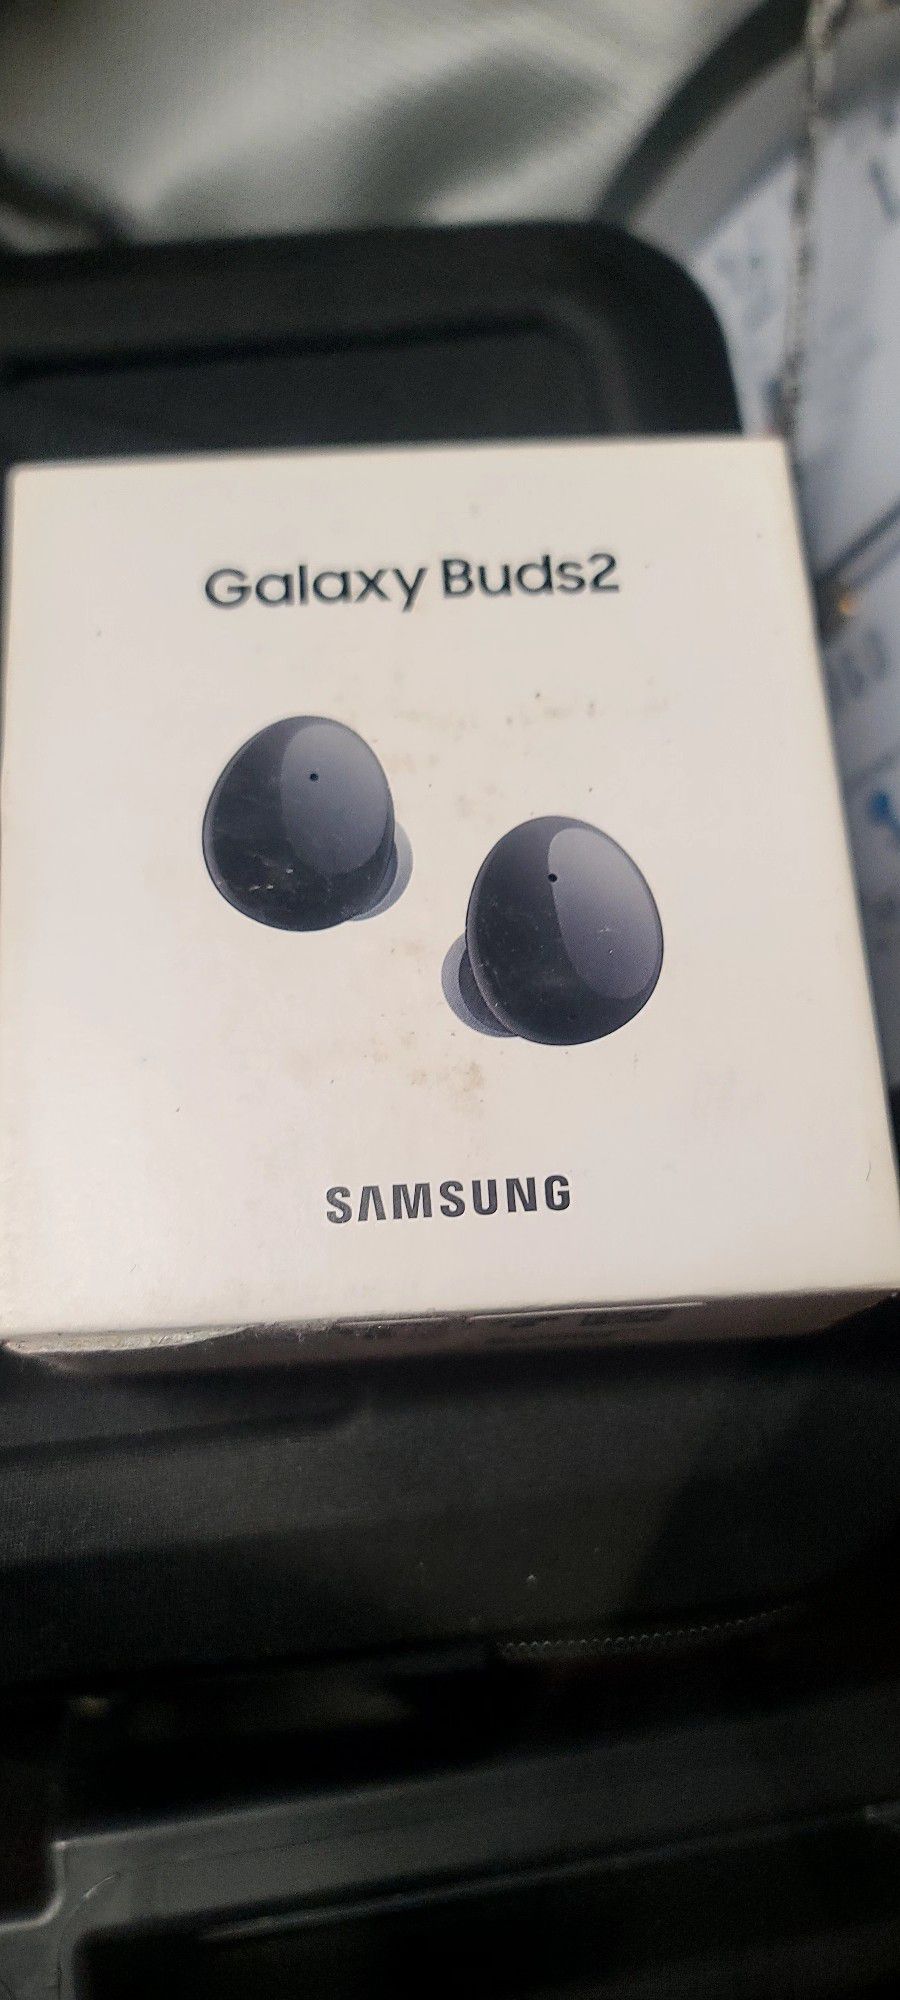 Galaxy Buds2